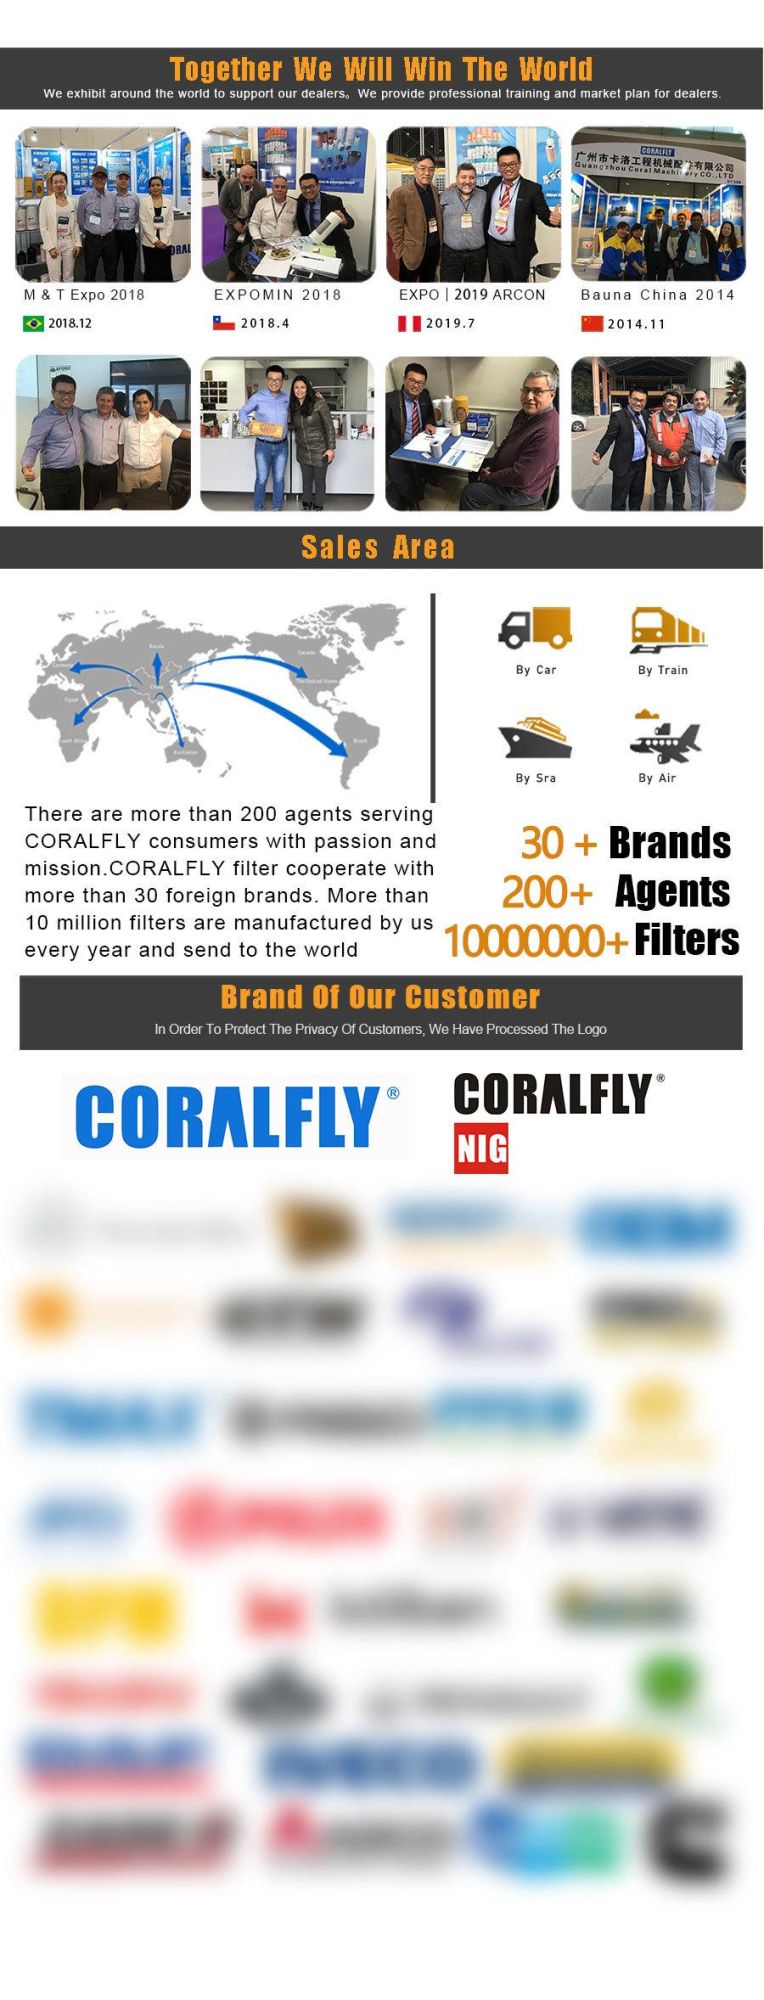 Coralfly Air Filter Me063140 291y1-07031 P52-6432 P13-4354 AV7480b To7843 PA2578 PA3689 for Mitsubishi/Donaldson/Micro/Toyo/Baldwin